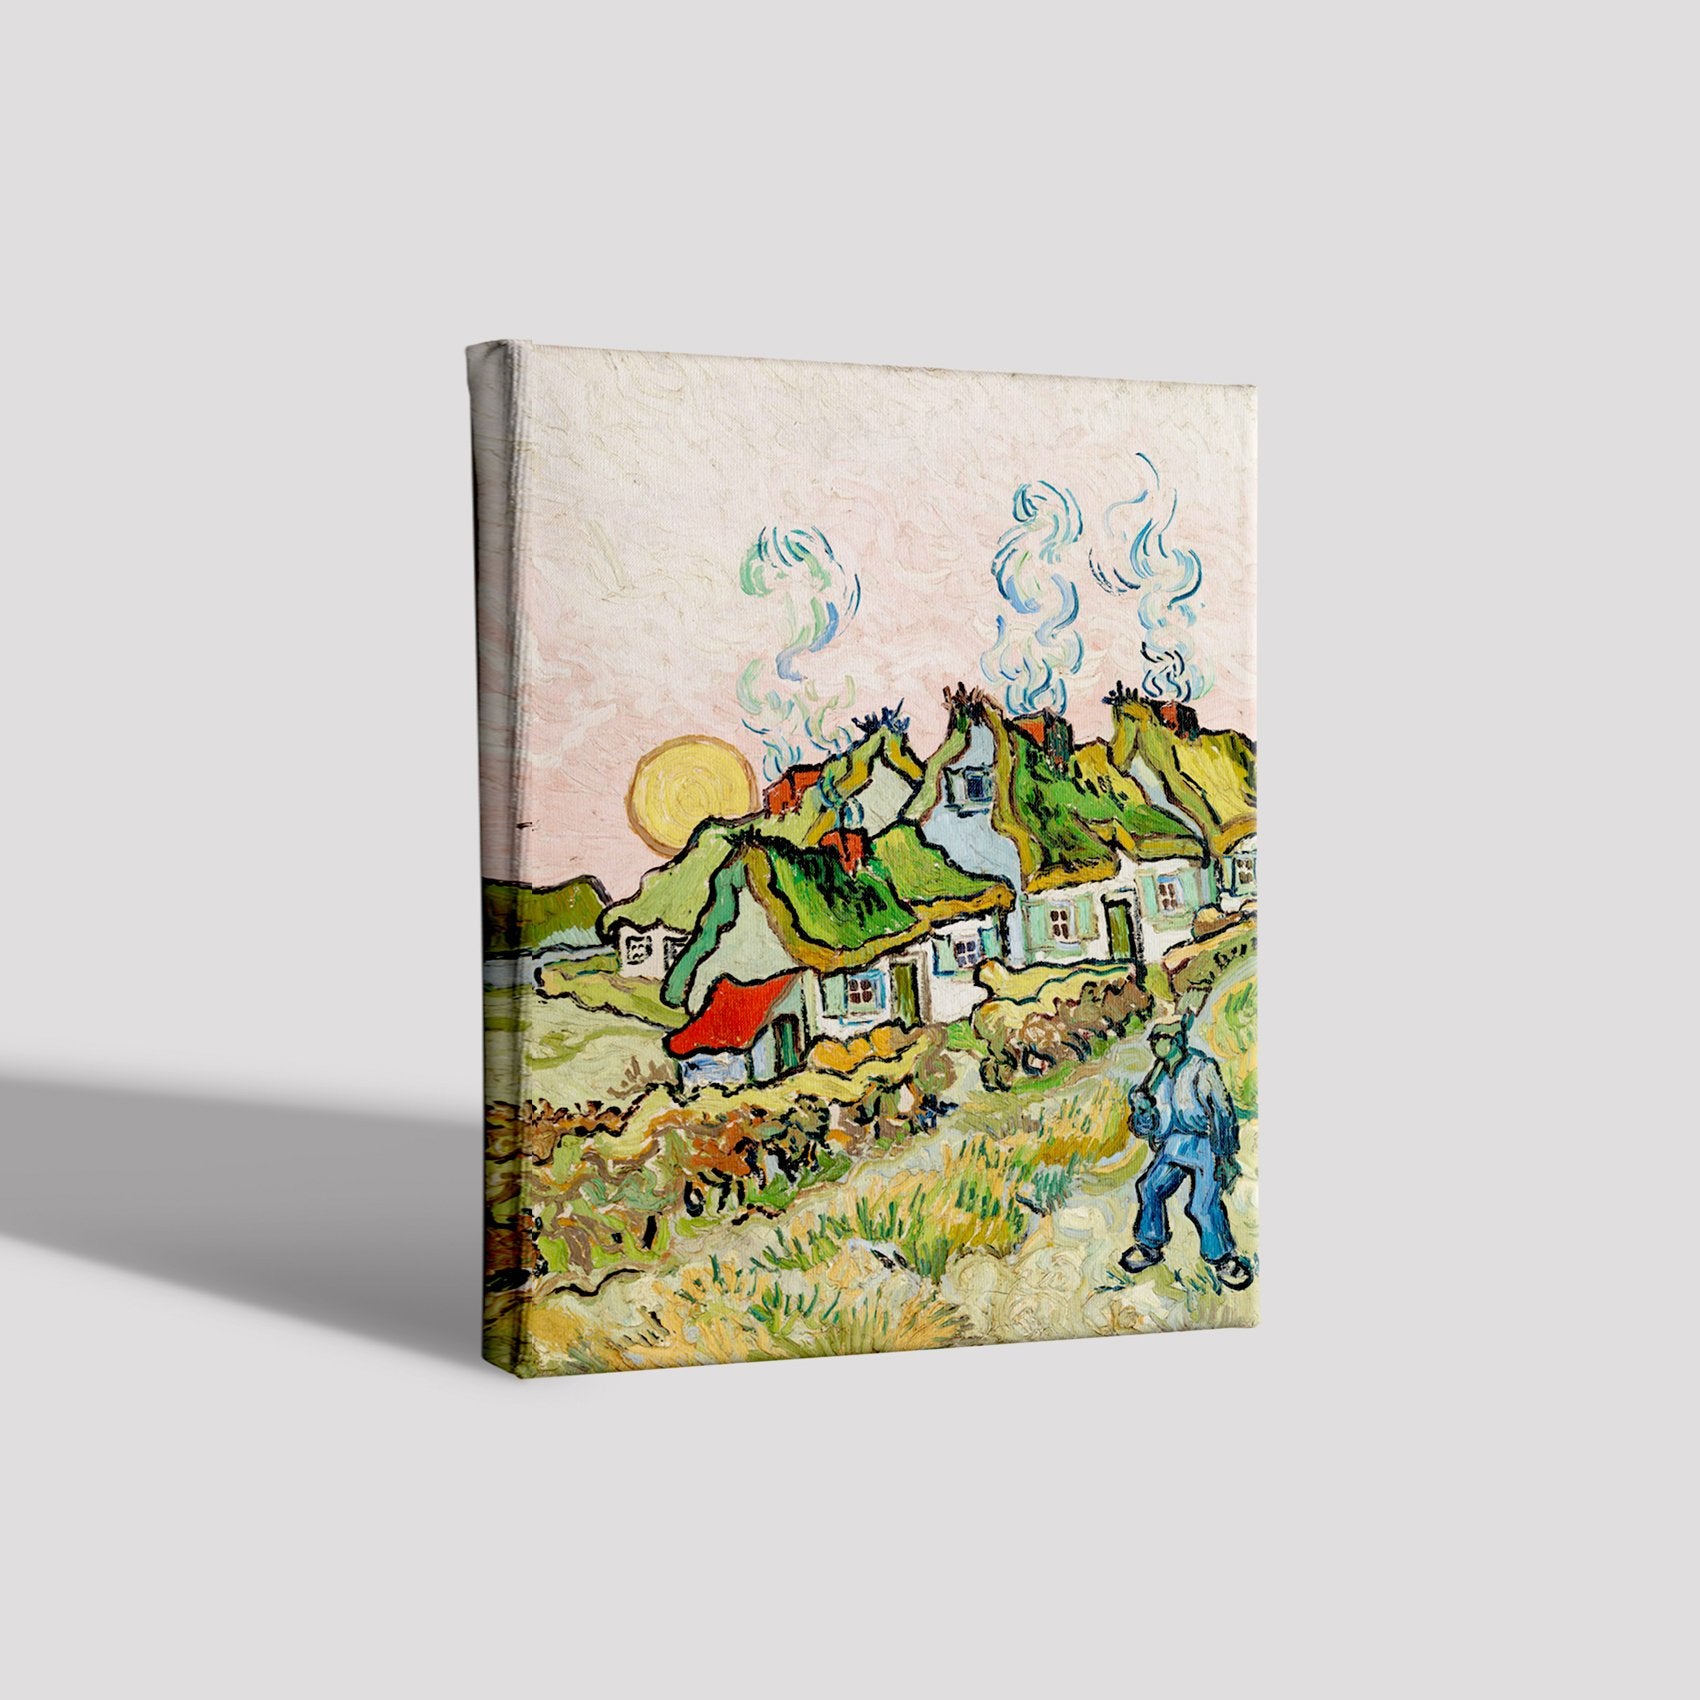 Thatched Cottages in the Sunshine By Van Gogh Painting - Meri Deewar - MeriDeewar